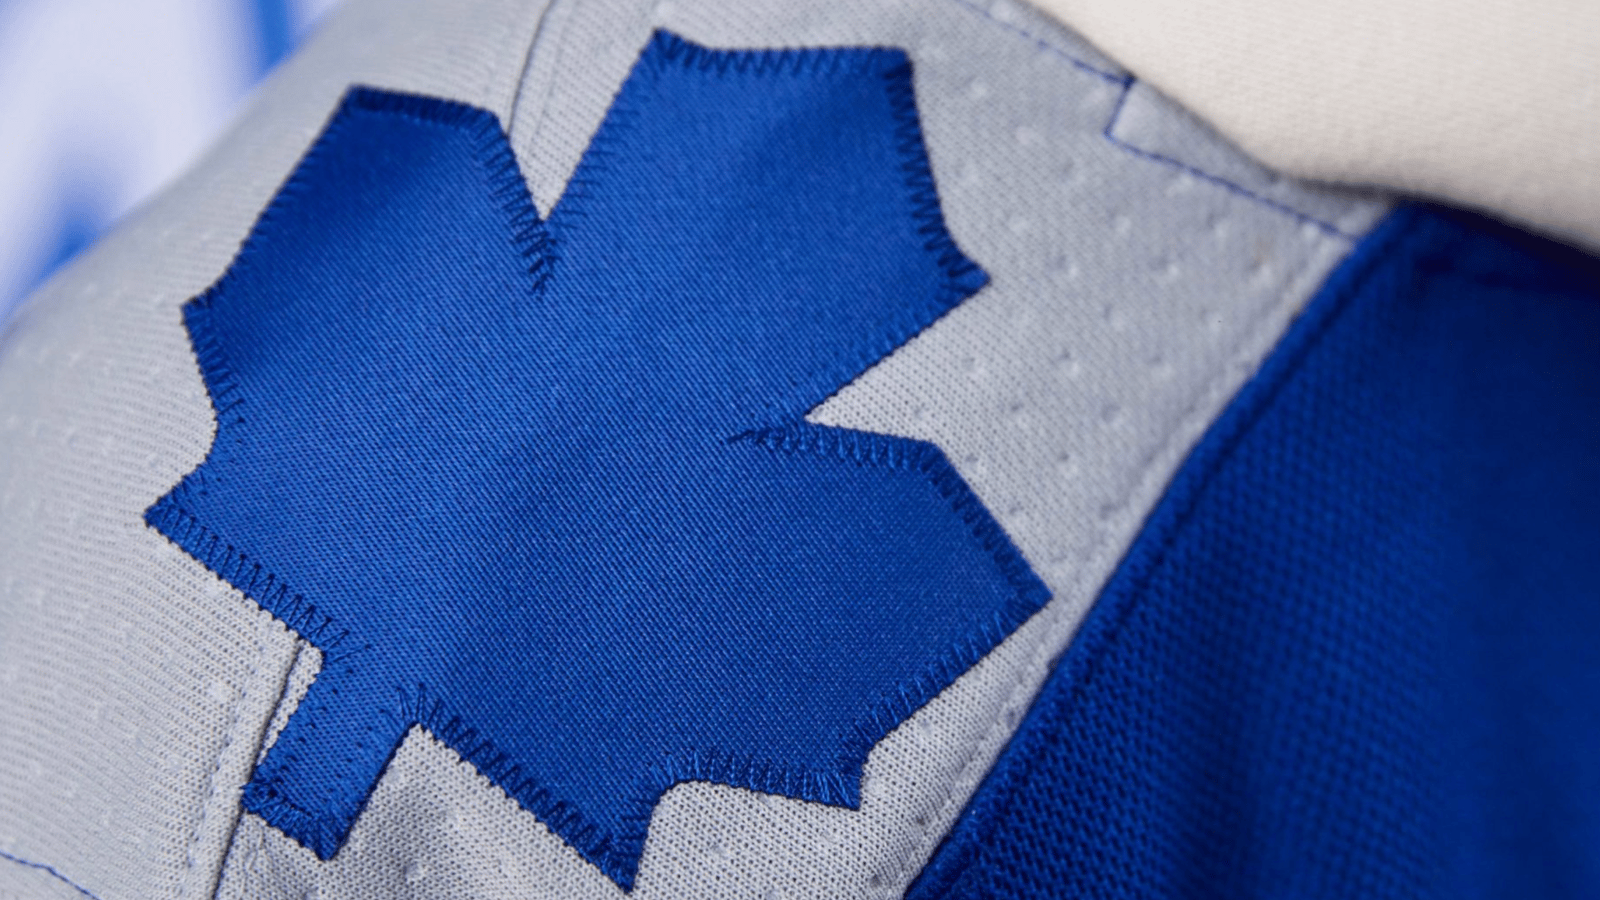 Maple Leafs mourn death of former goaltender 